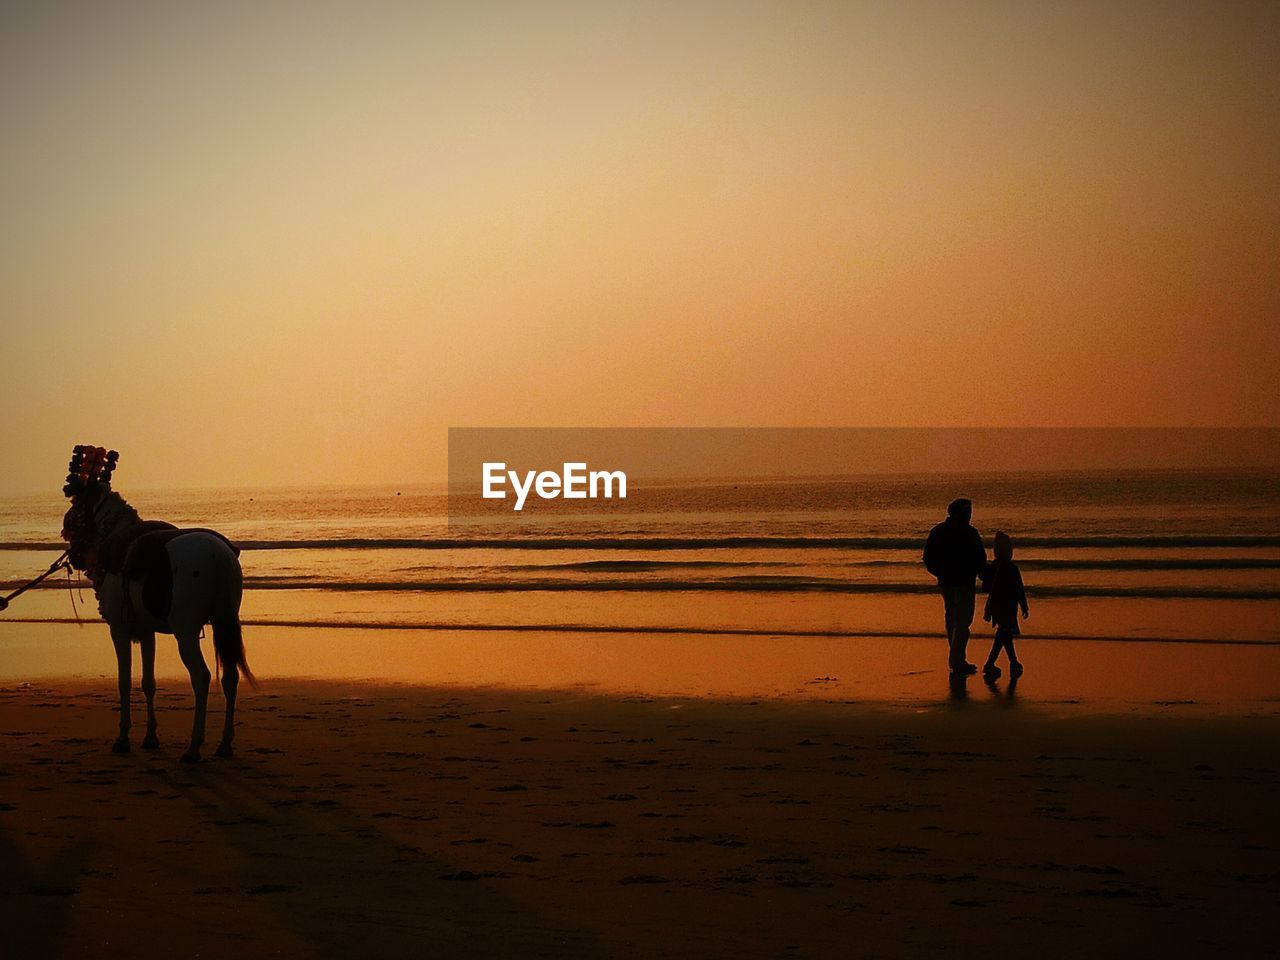 SILHOUETTE MAN RIDING HORSE ON BEACH